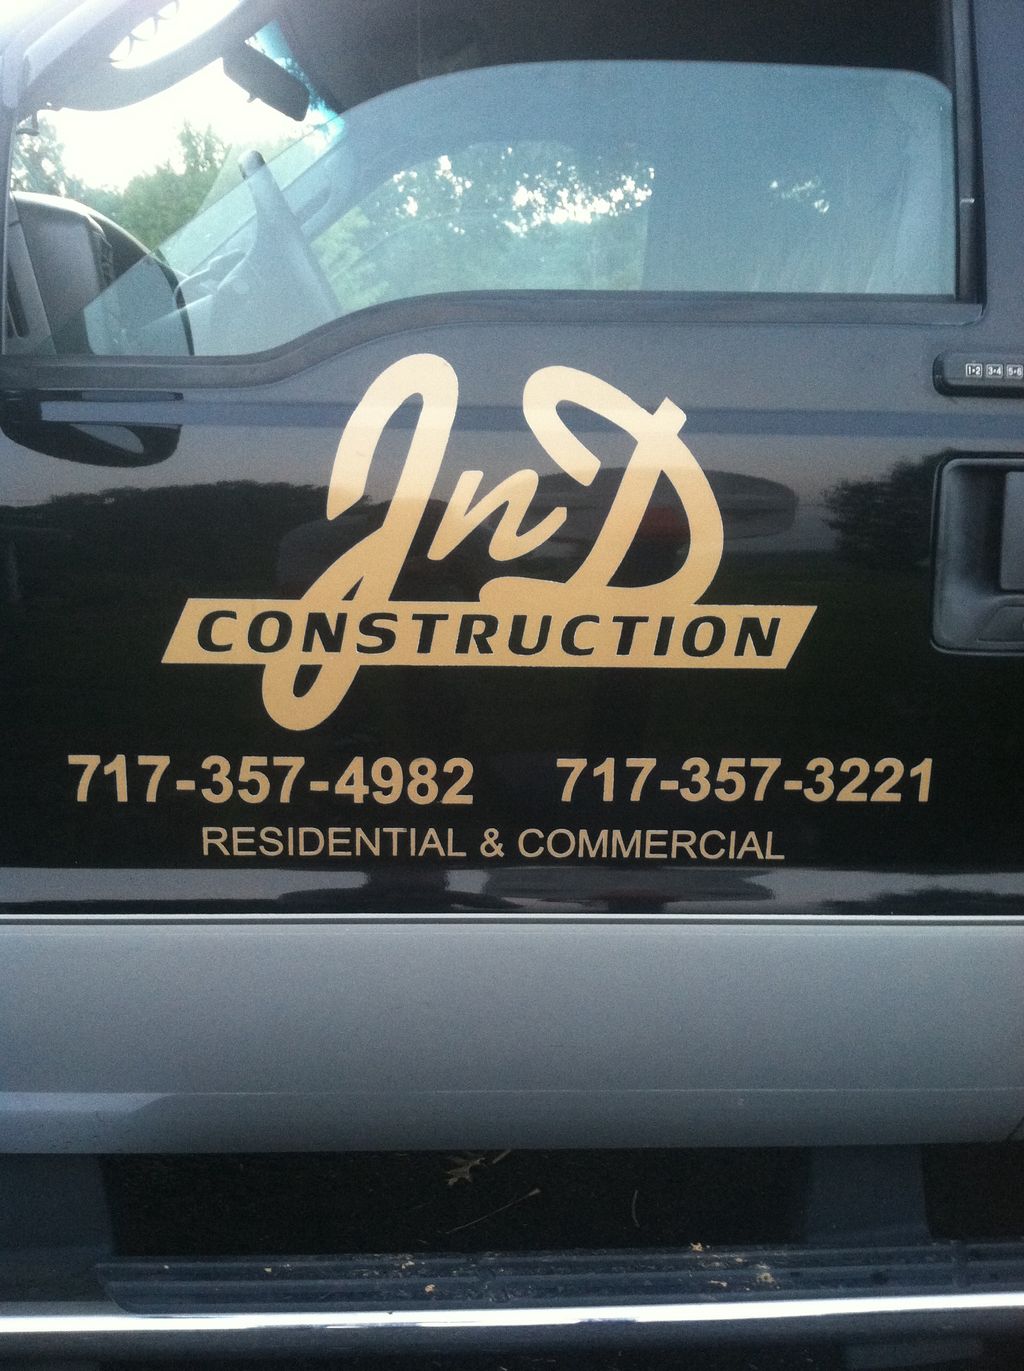 JND Construction